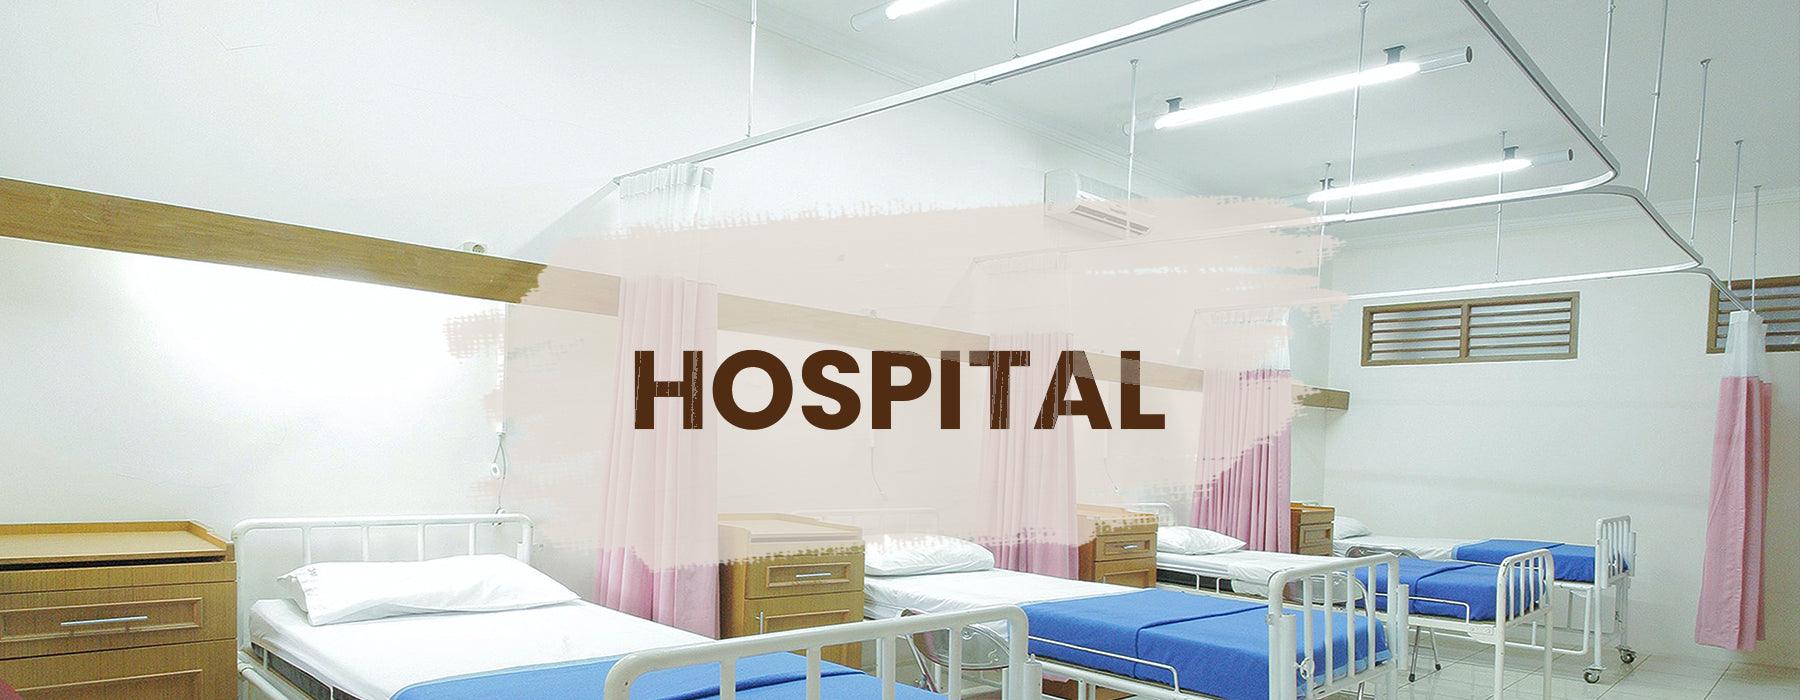 Hospital Lights - Ankur Lighting